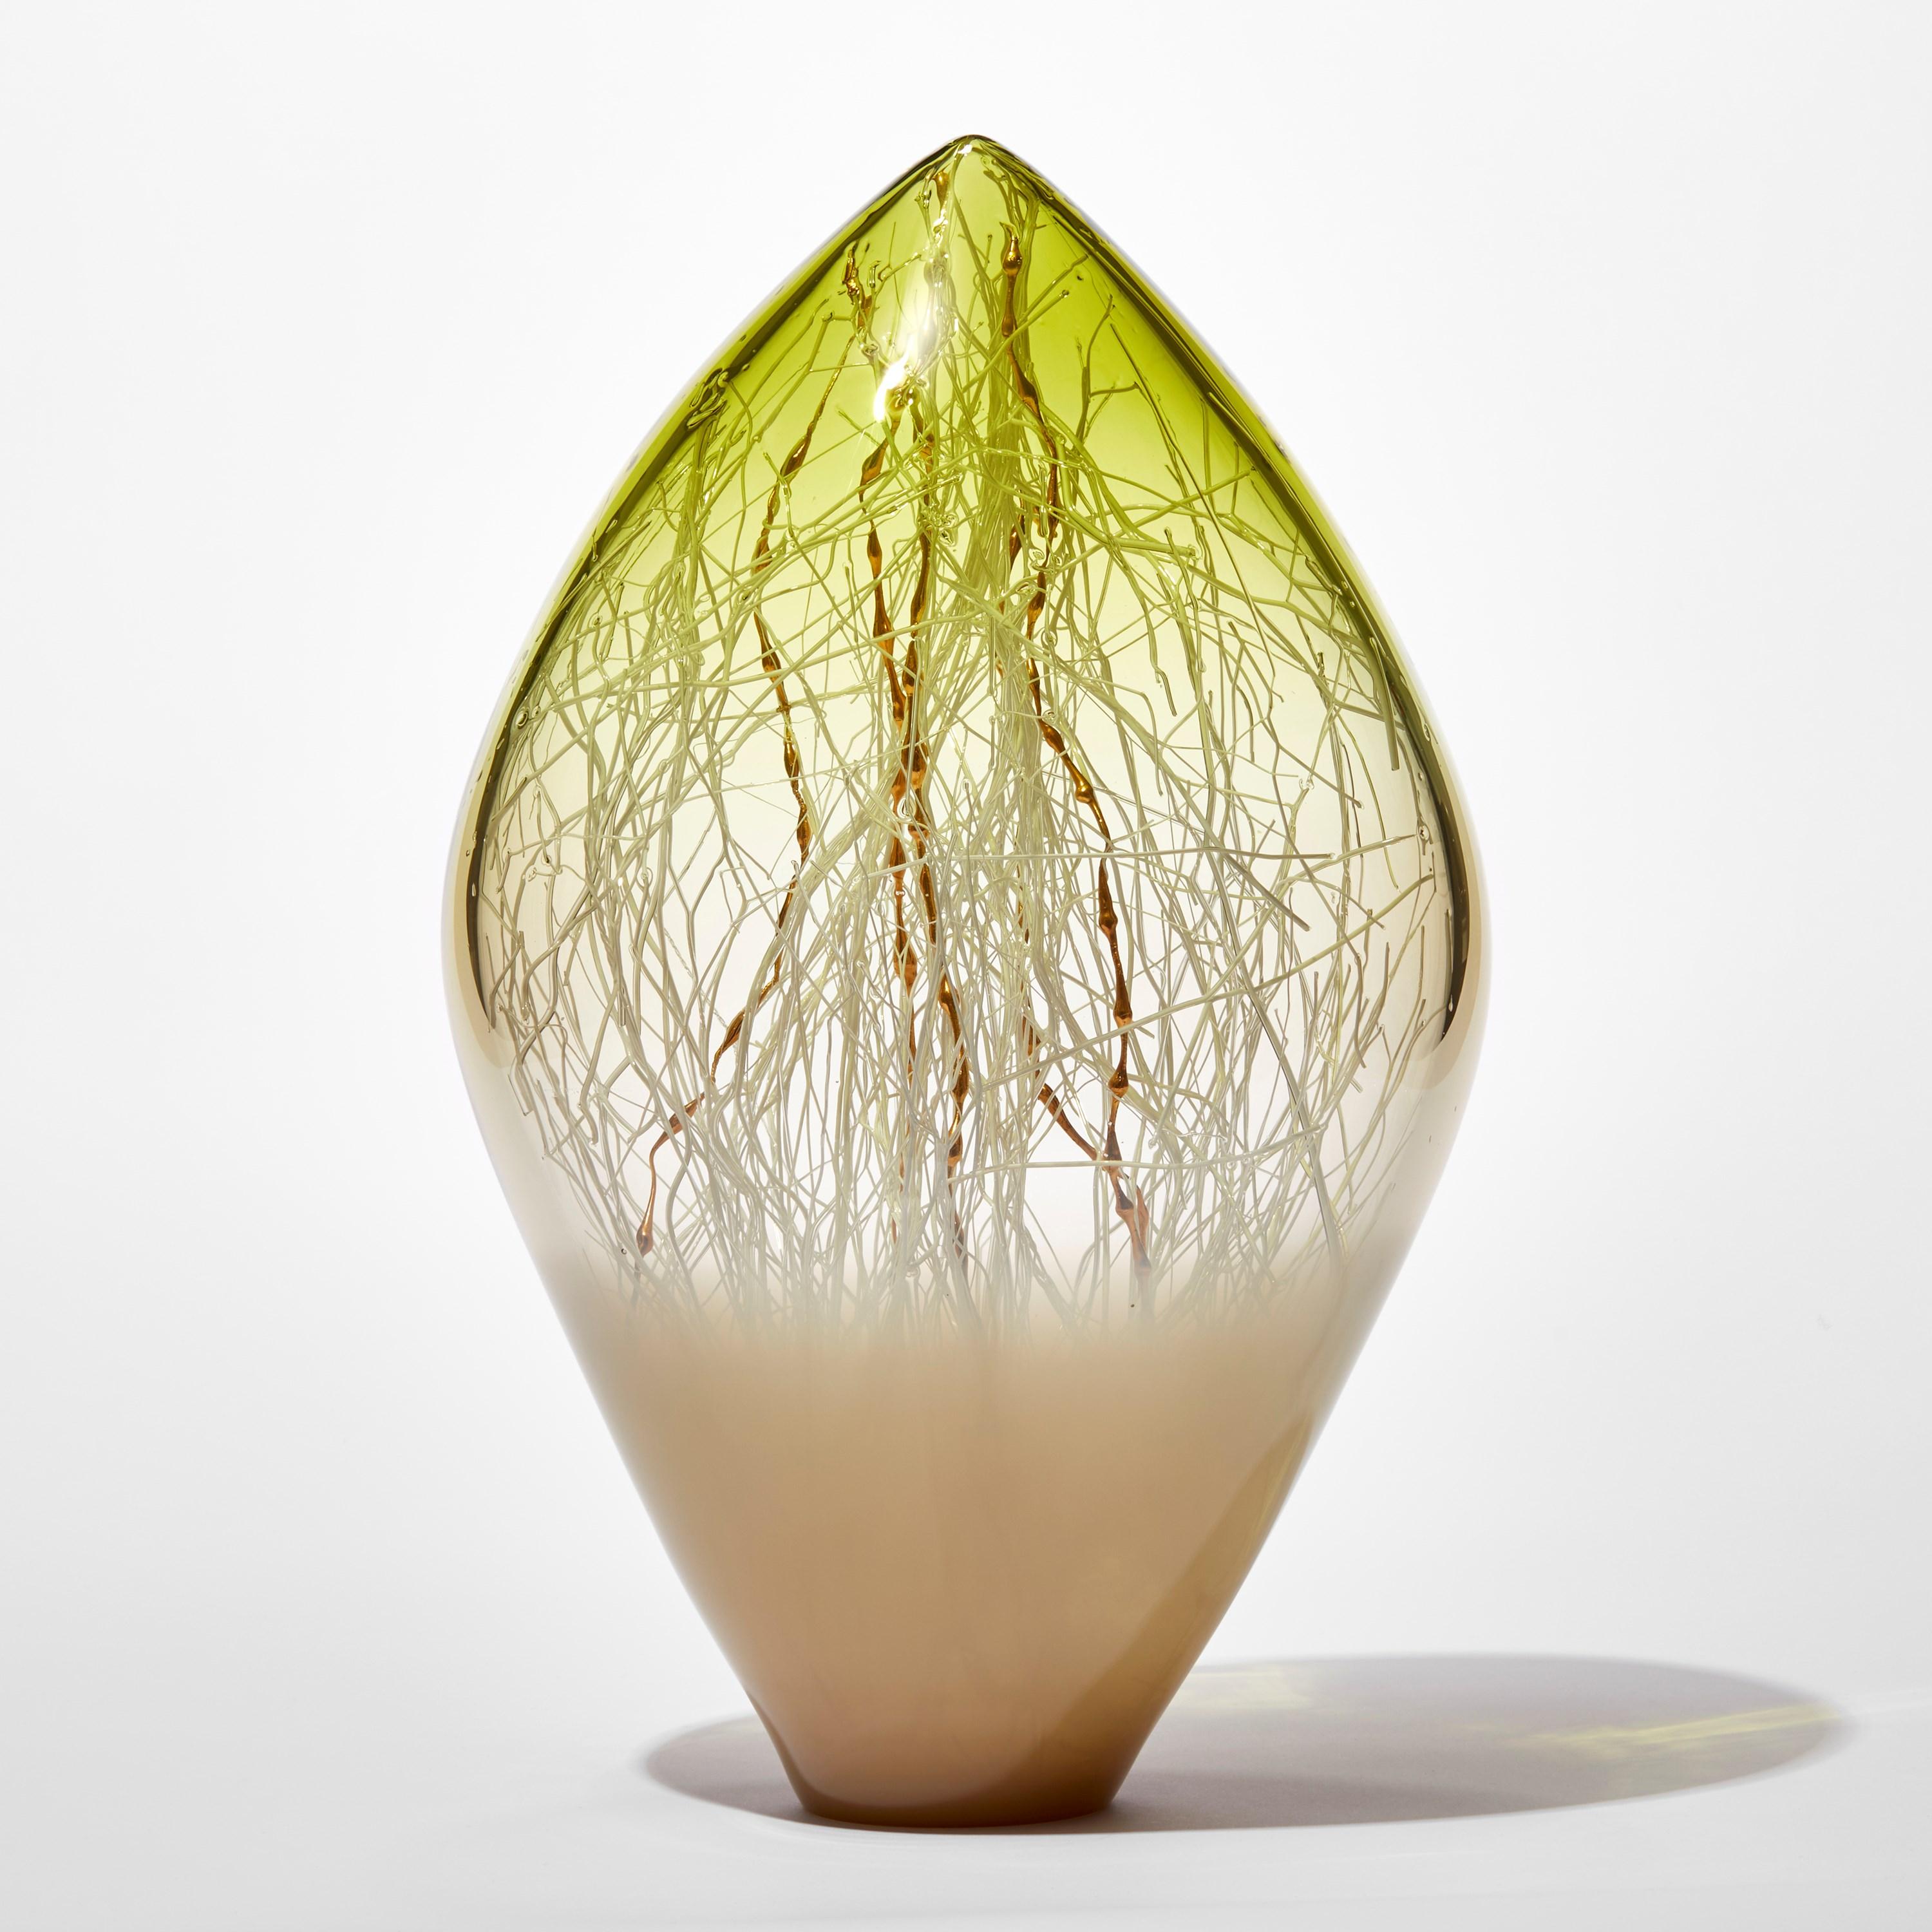 Organic Modern Elixir in Weimaraner & Olive Green, glass & gold sculpture by Enemark & Thompson For Sale